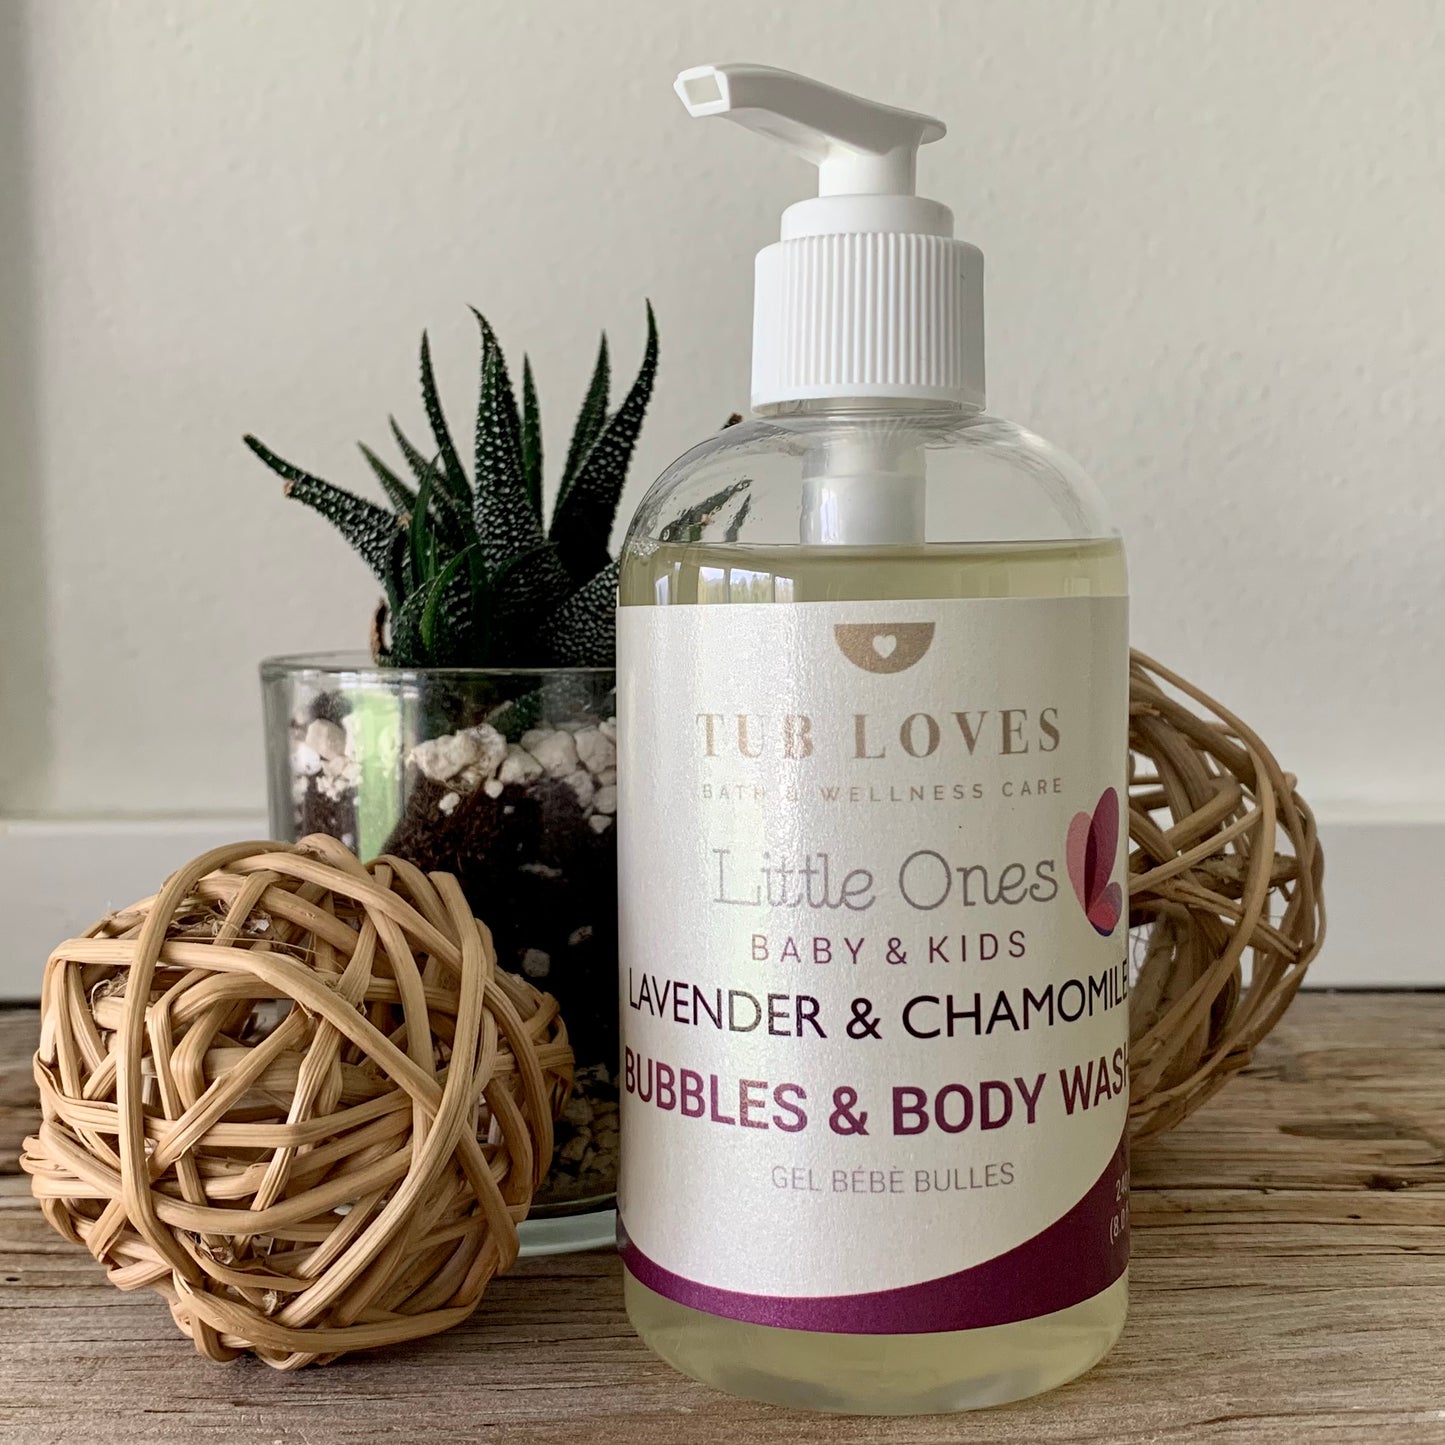 Bubbles & Body Wash - Lavender & Chamomile - Tub Loves